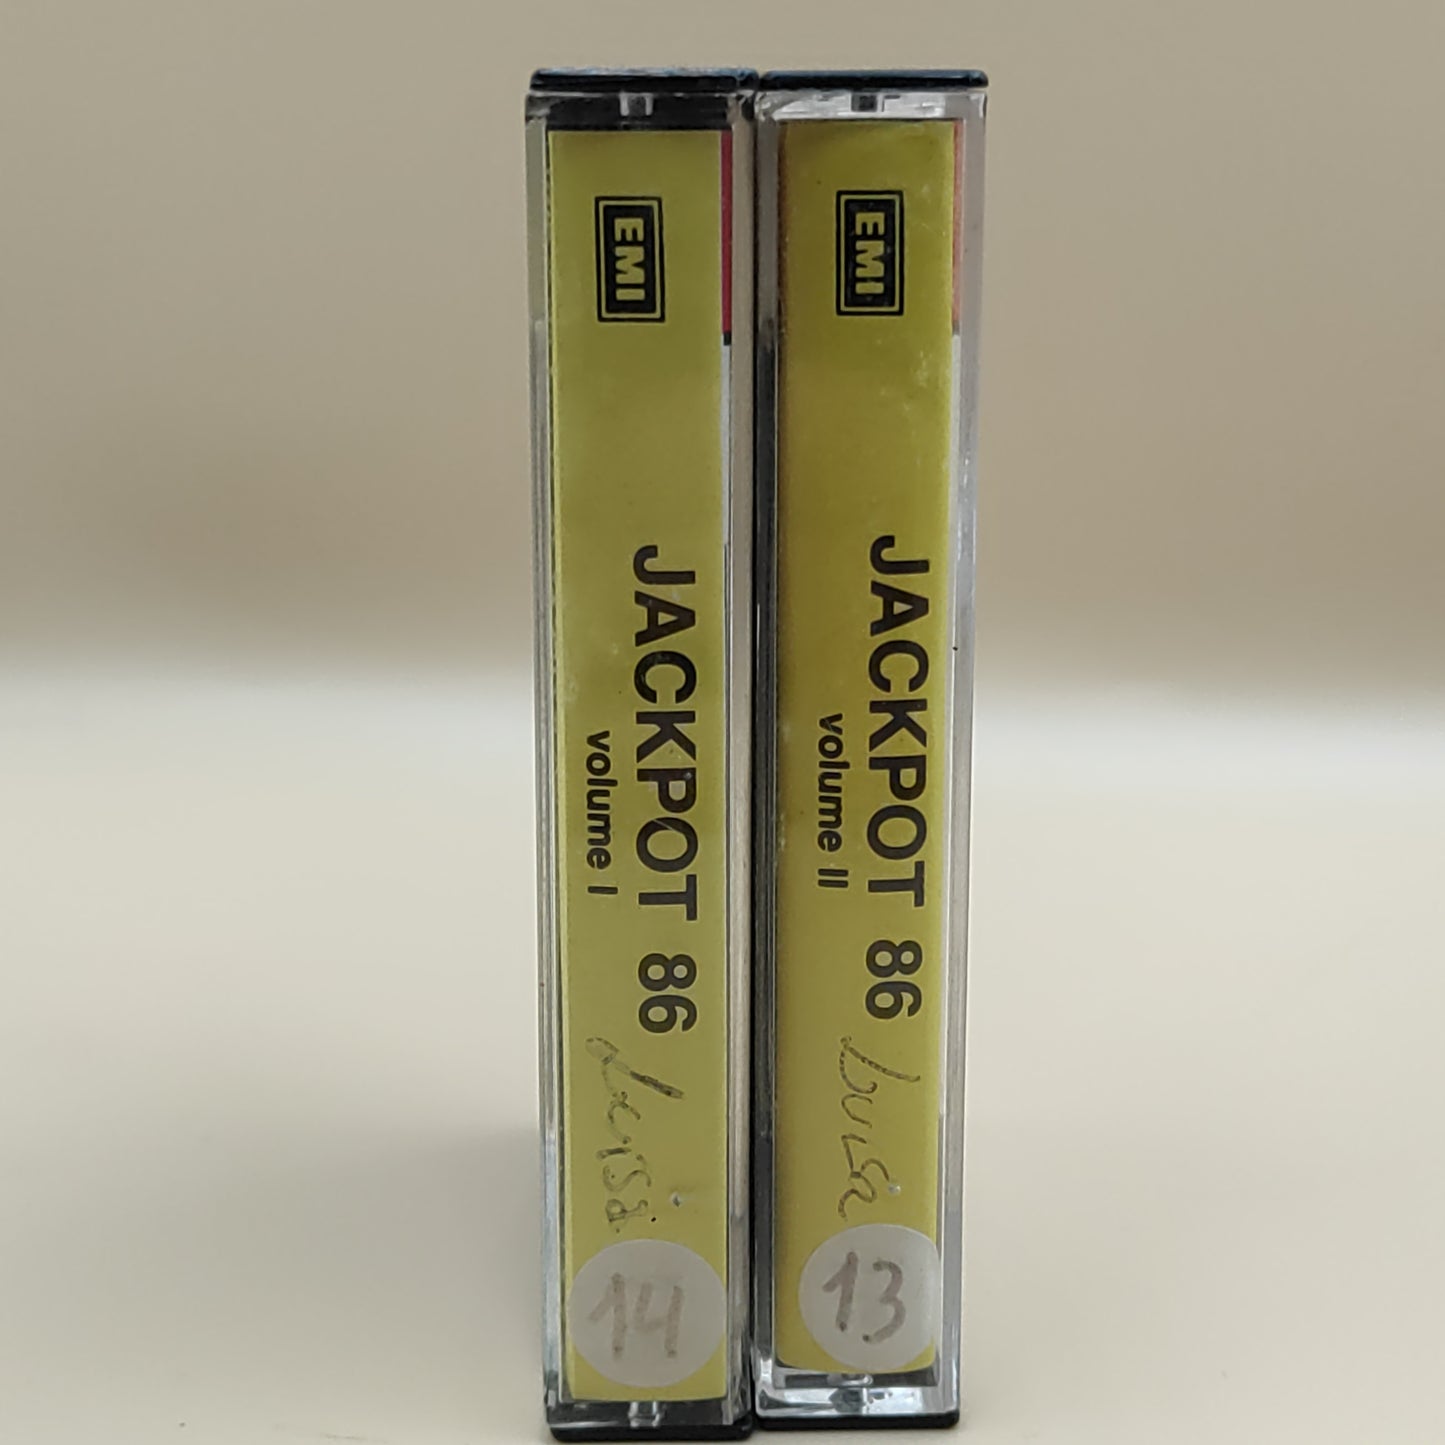 Jackpot 86 volume I + Volume II